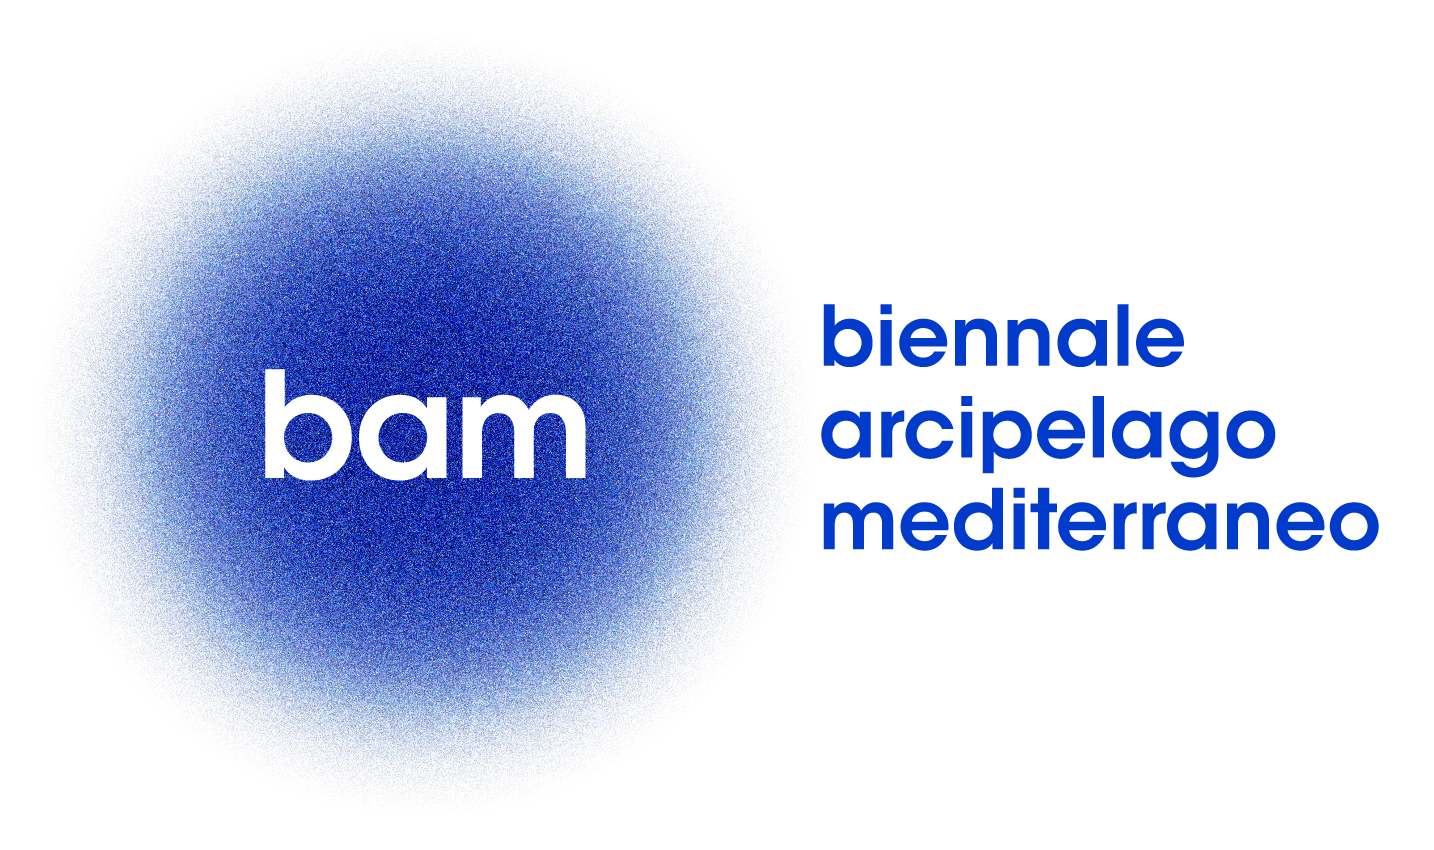 BAM Biennale Arcipelago Mediterraneo